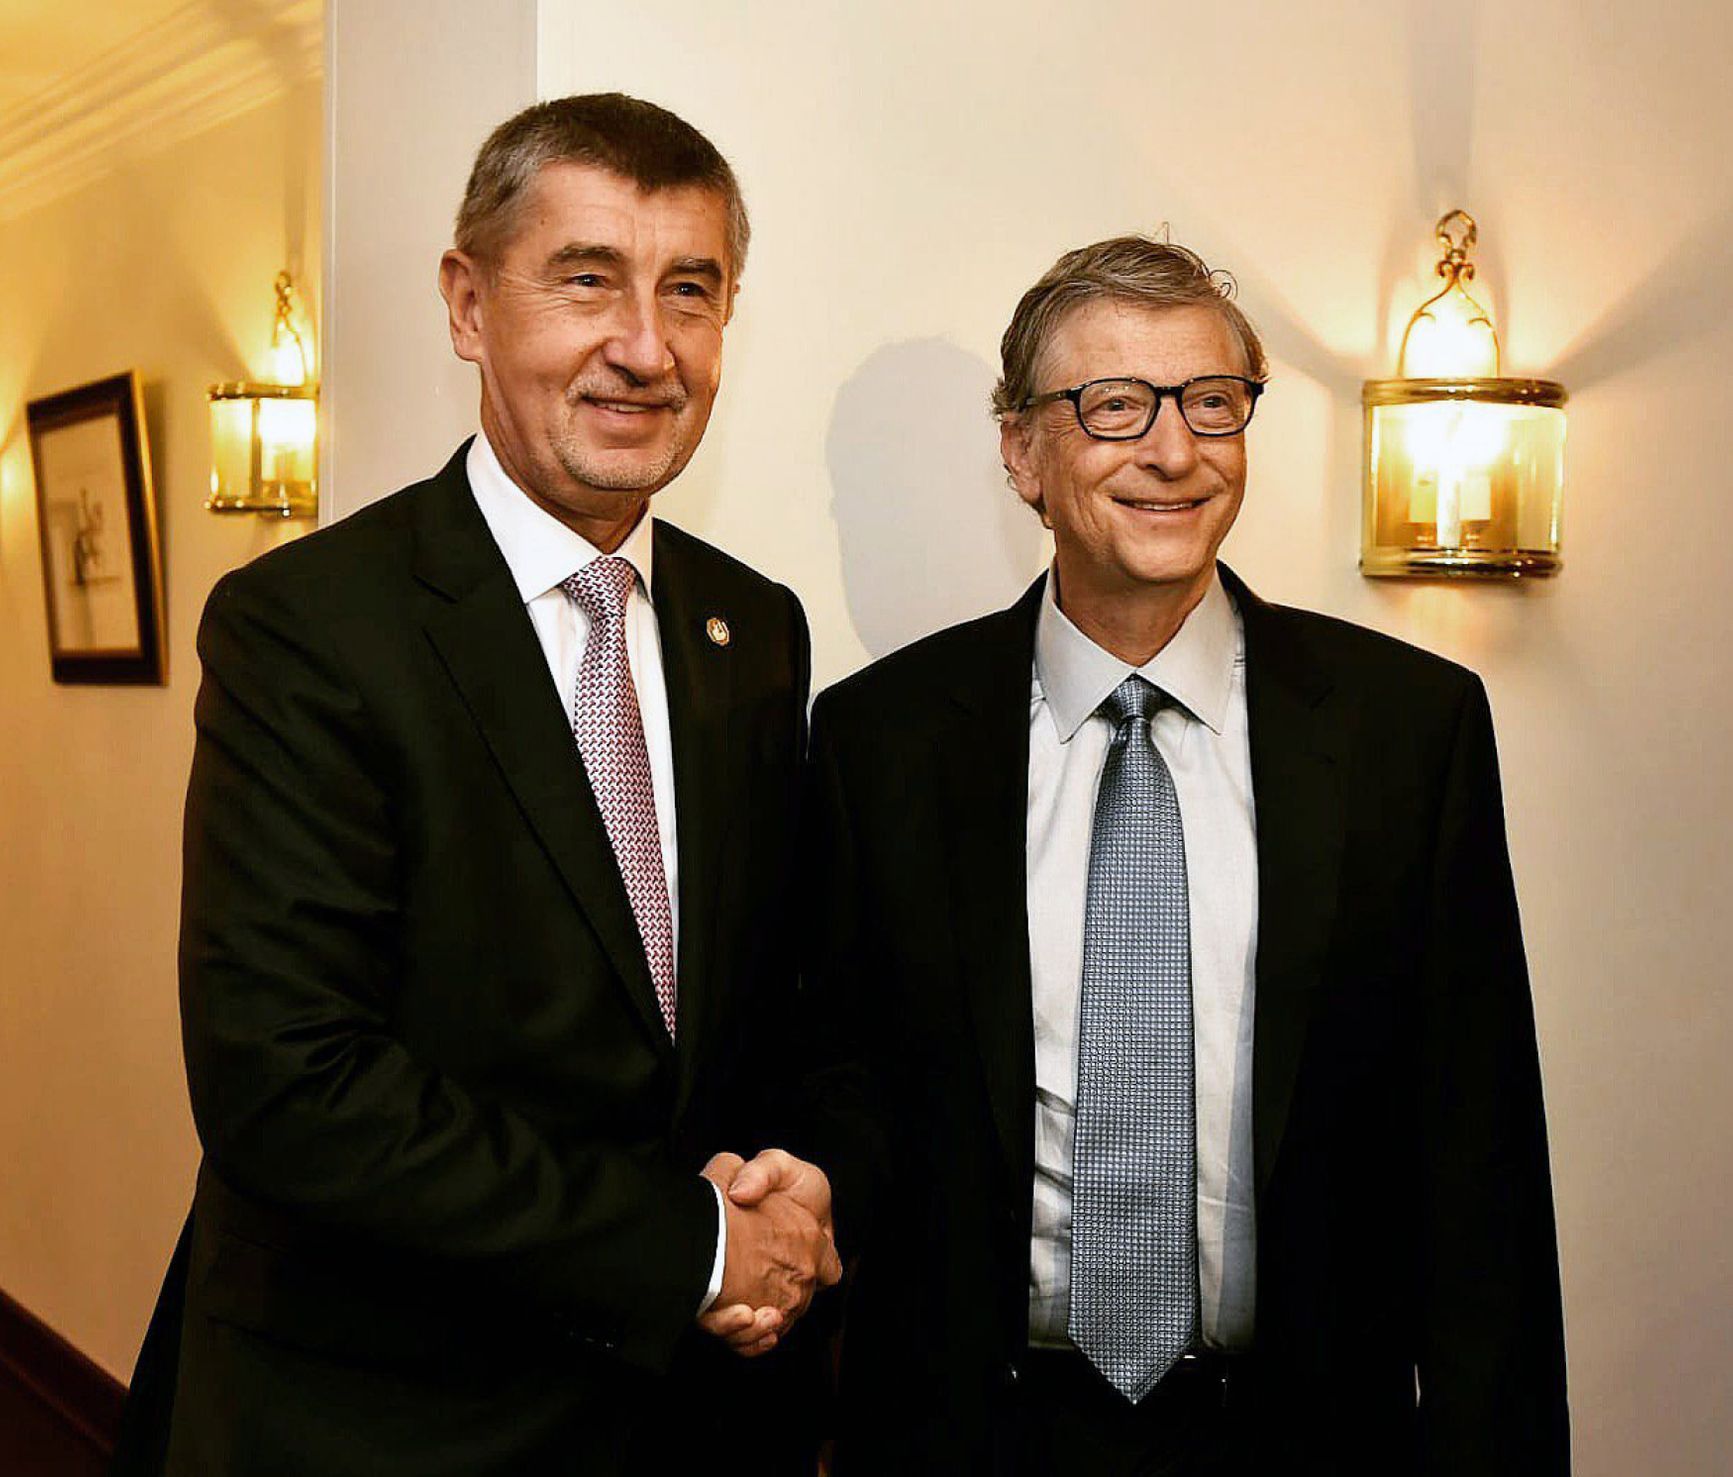 Andrej Babiš / Bill Gates / 18. 10. 2018 / Brusel